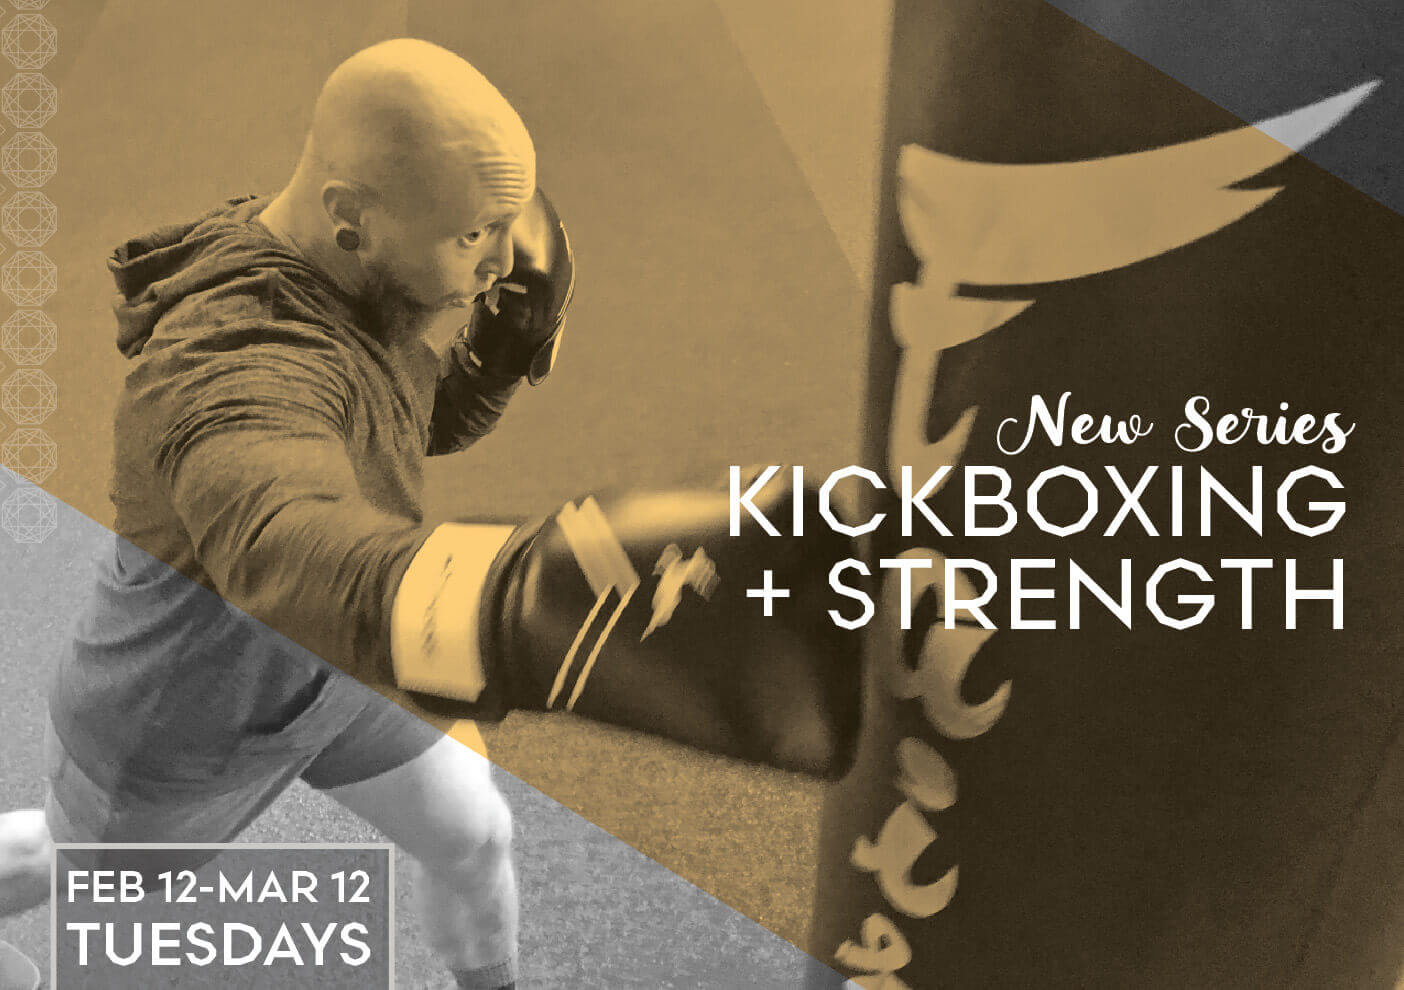 Kickboxing + Strength